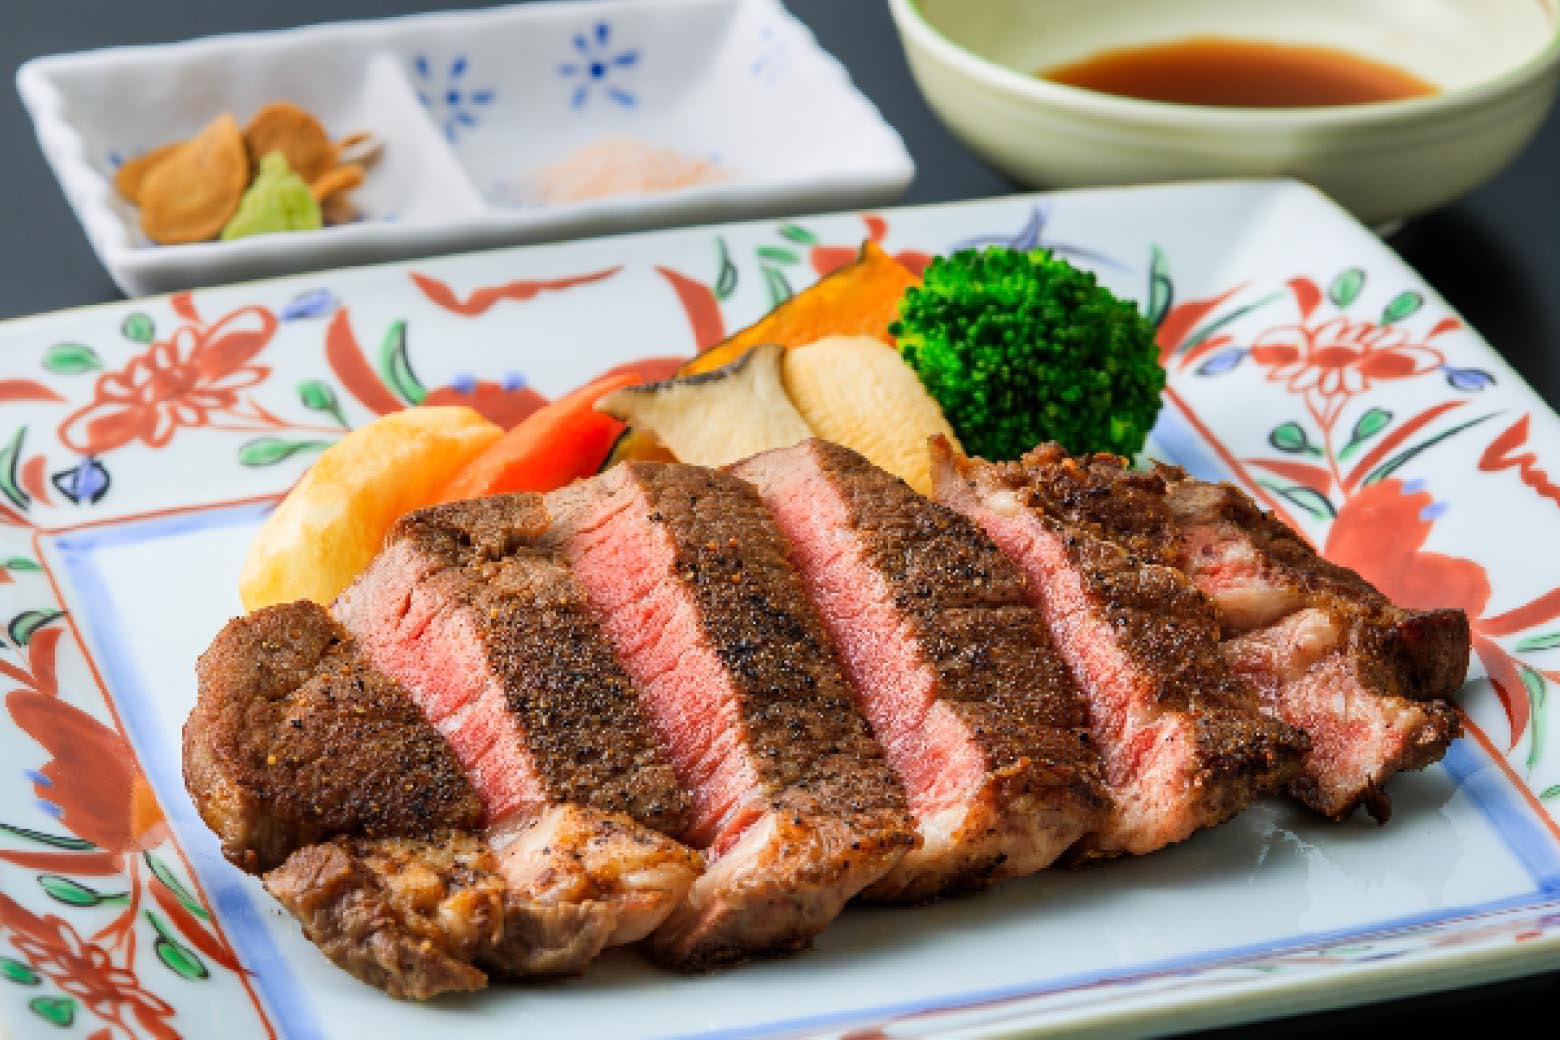 Japan-produced Beef Steak